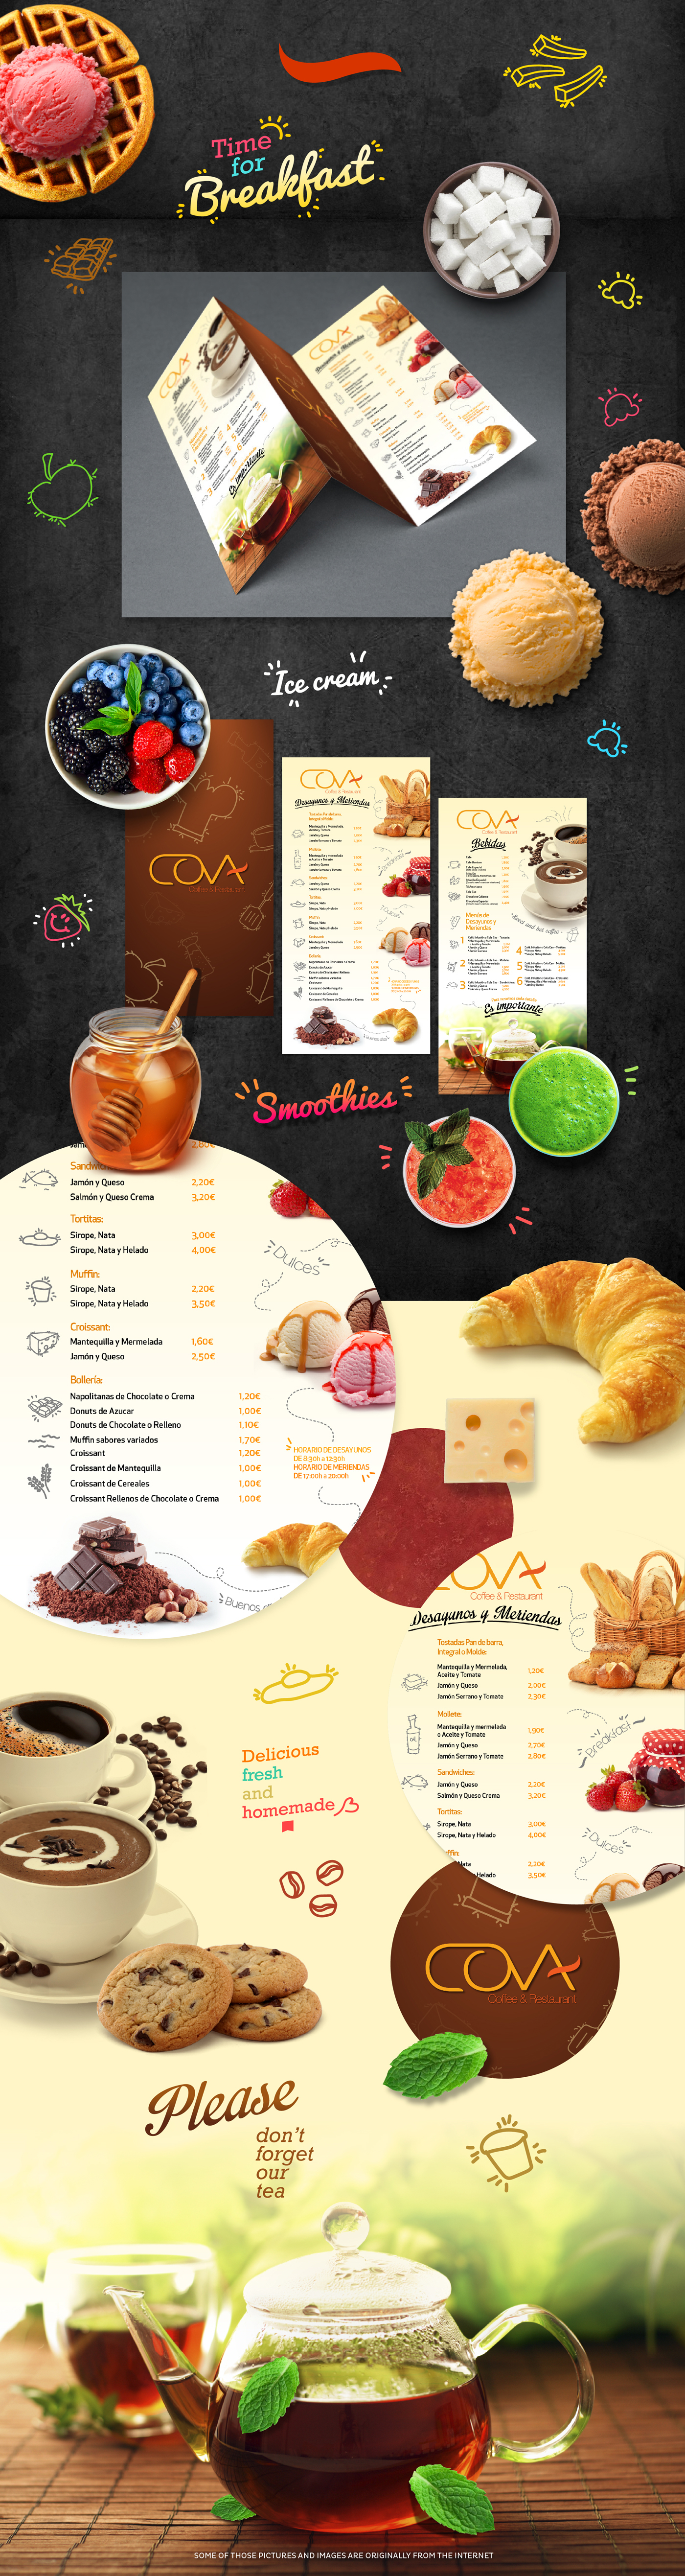 cova restaurant Coffee mediterranea comida gastronomia drinks madrid spain diseño gráfico menu gourmet